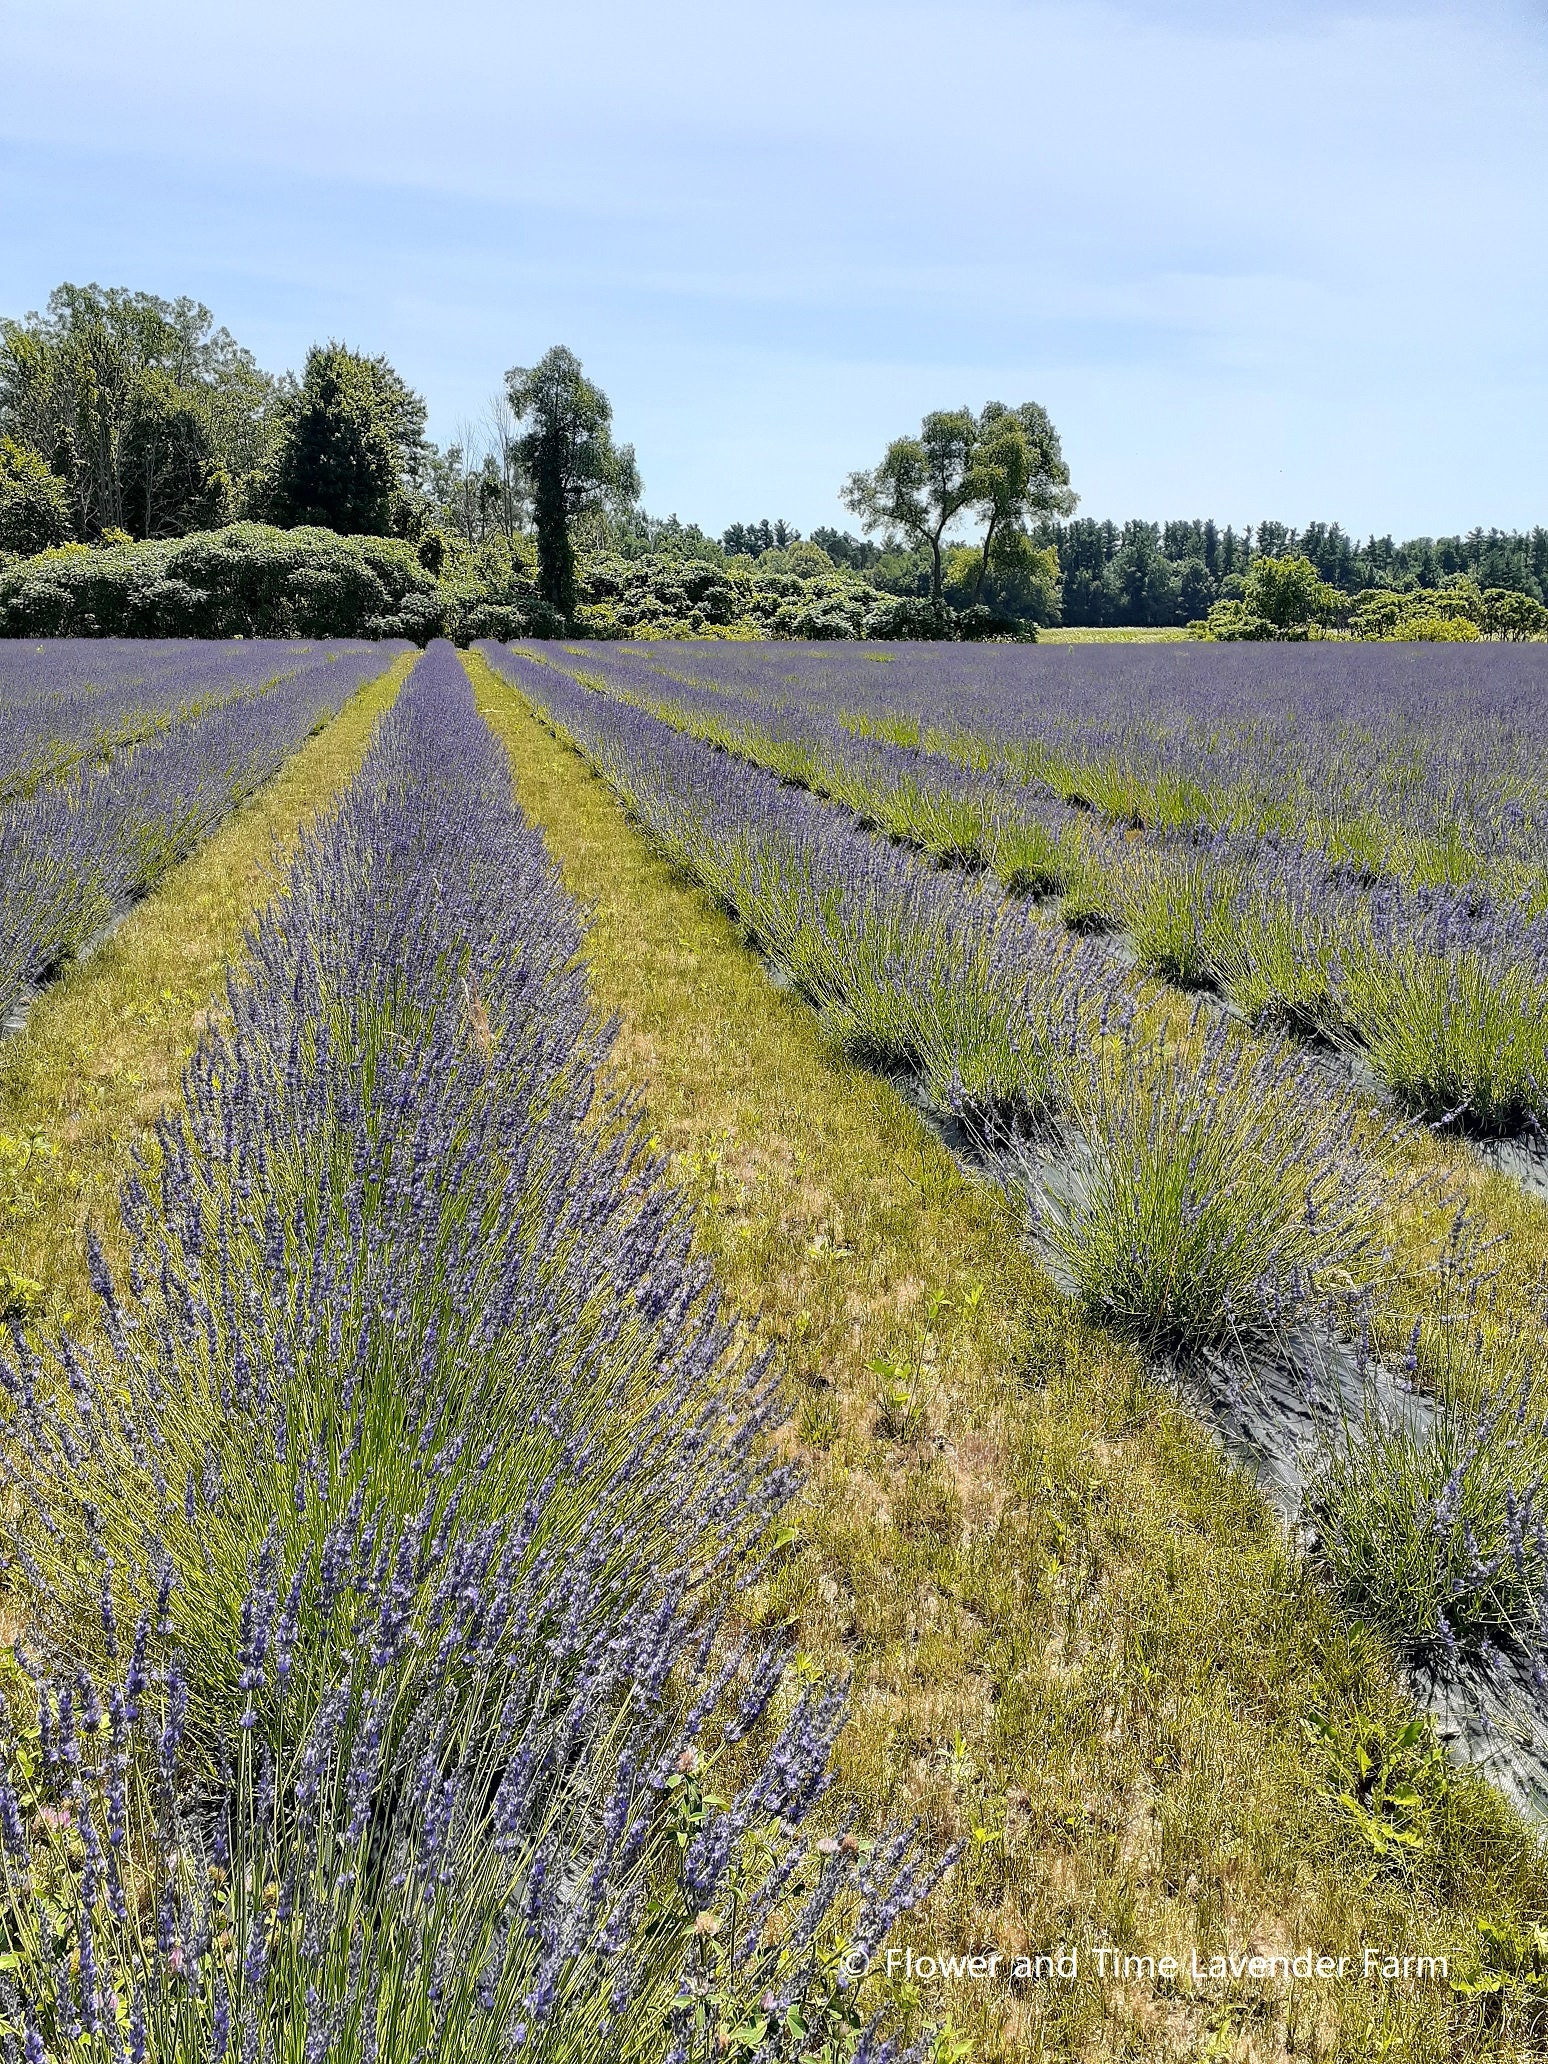 Dried French Lavender Bundles — ZENGENIUS, INC.